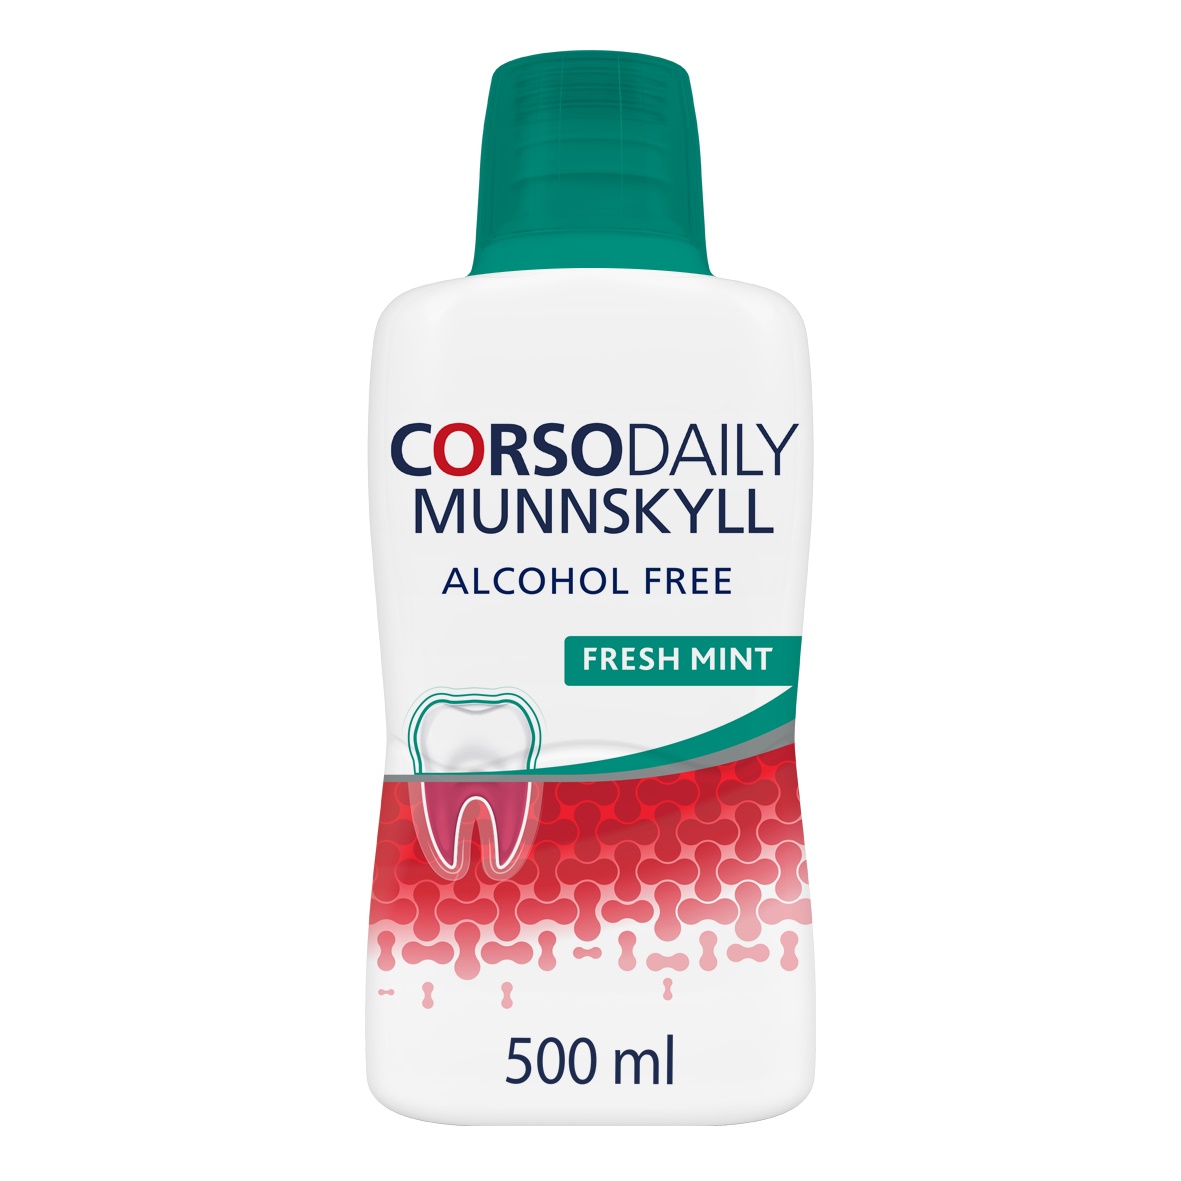 Corsodaily Munnskyll, 500 ml